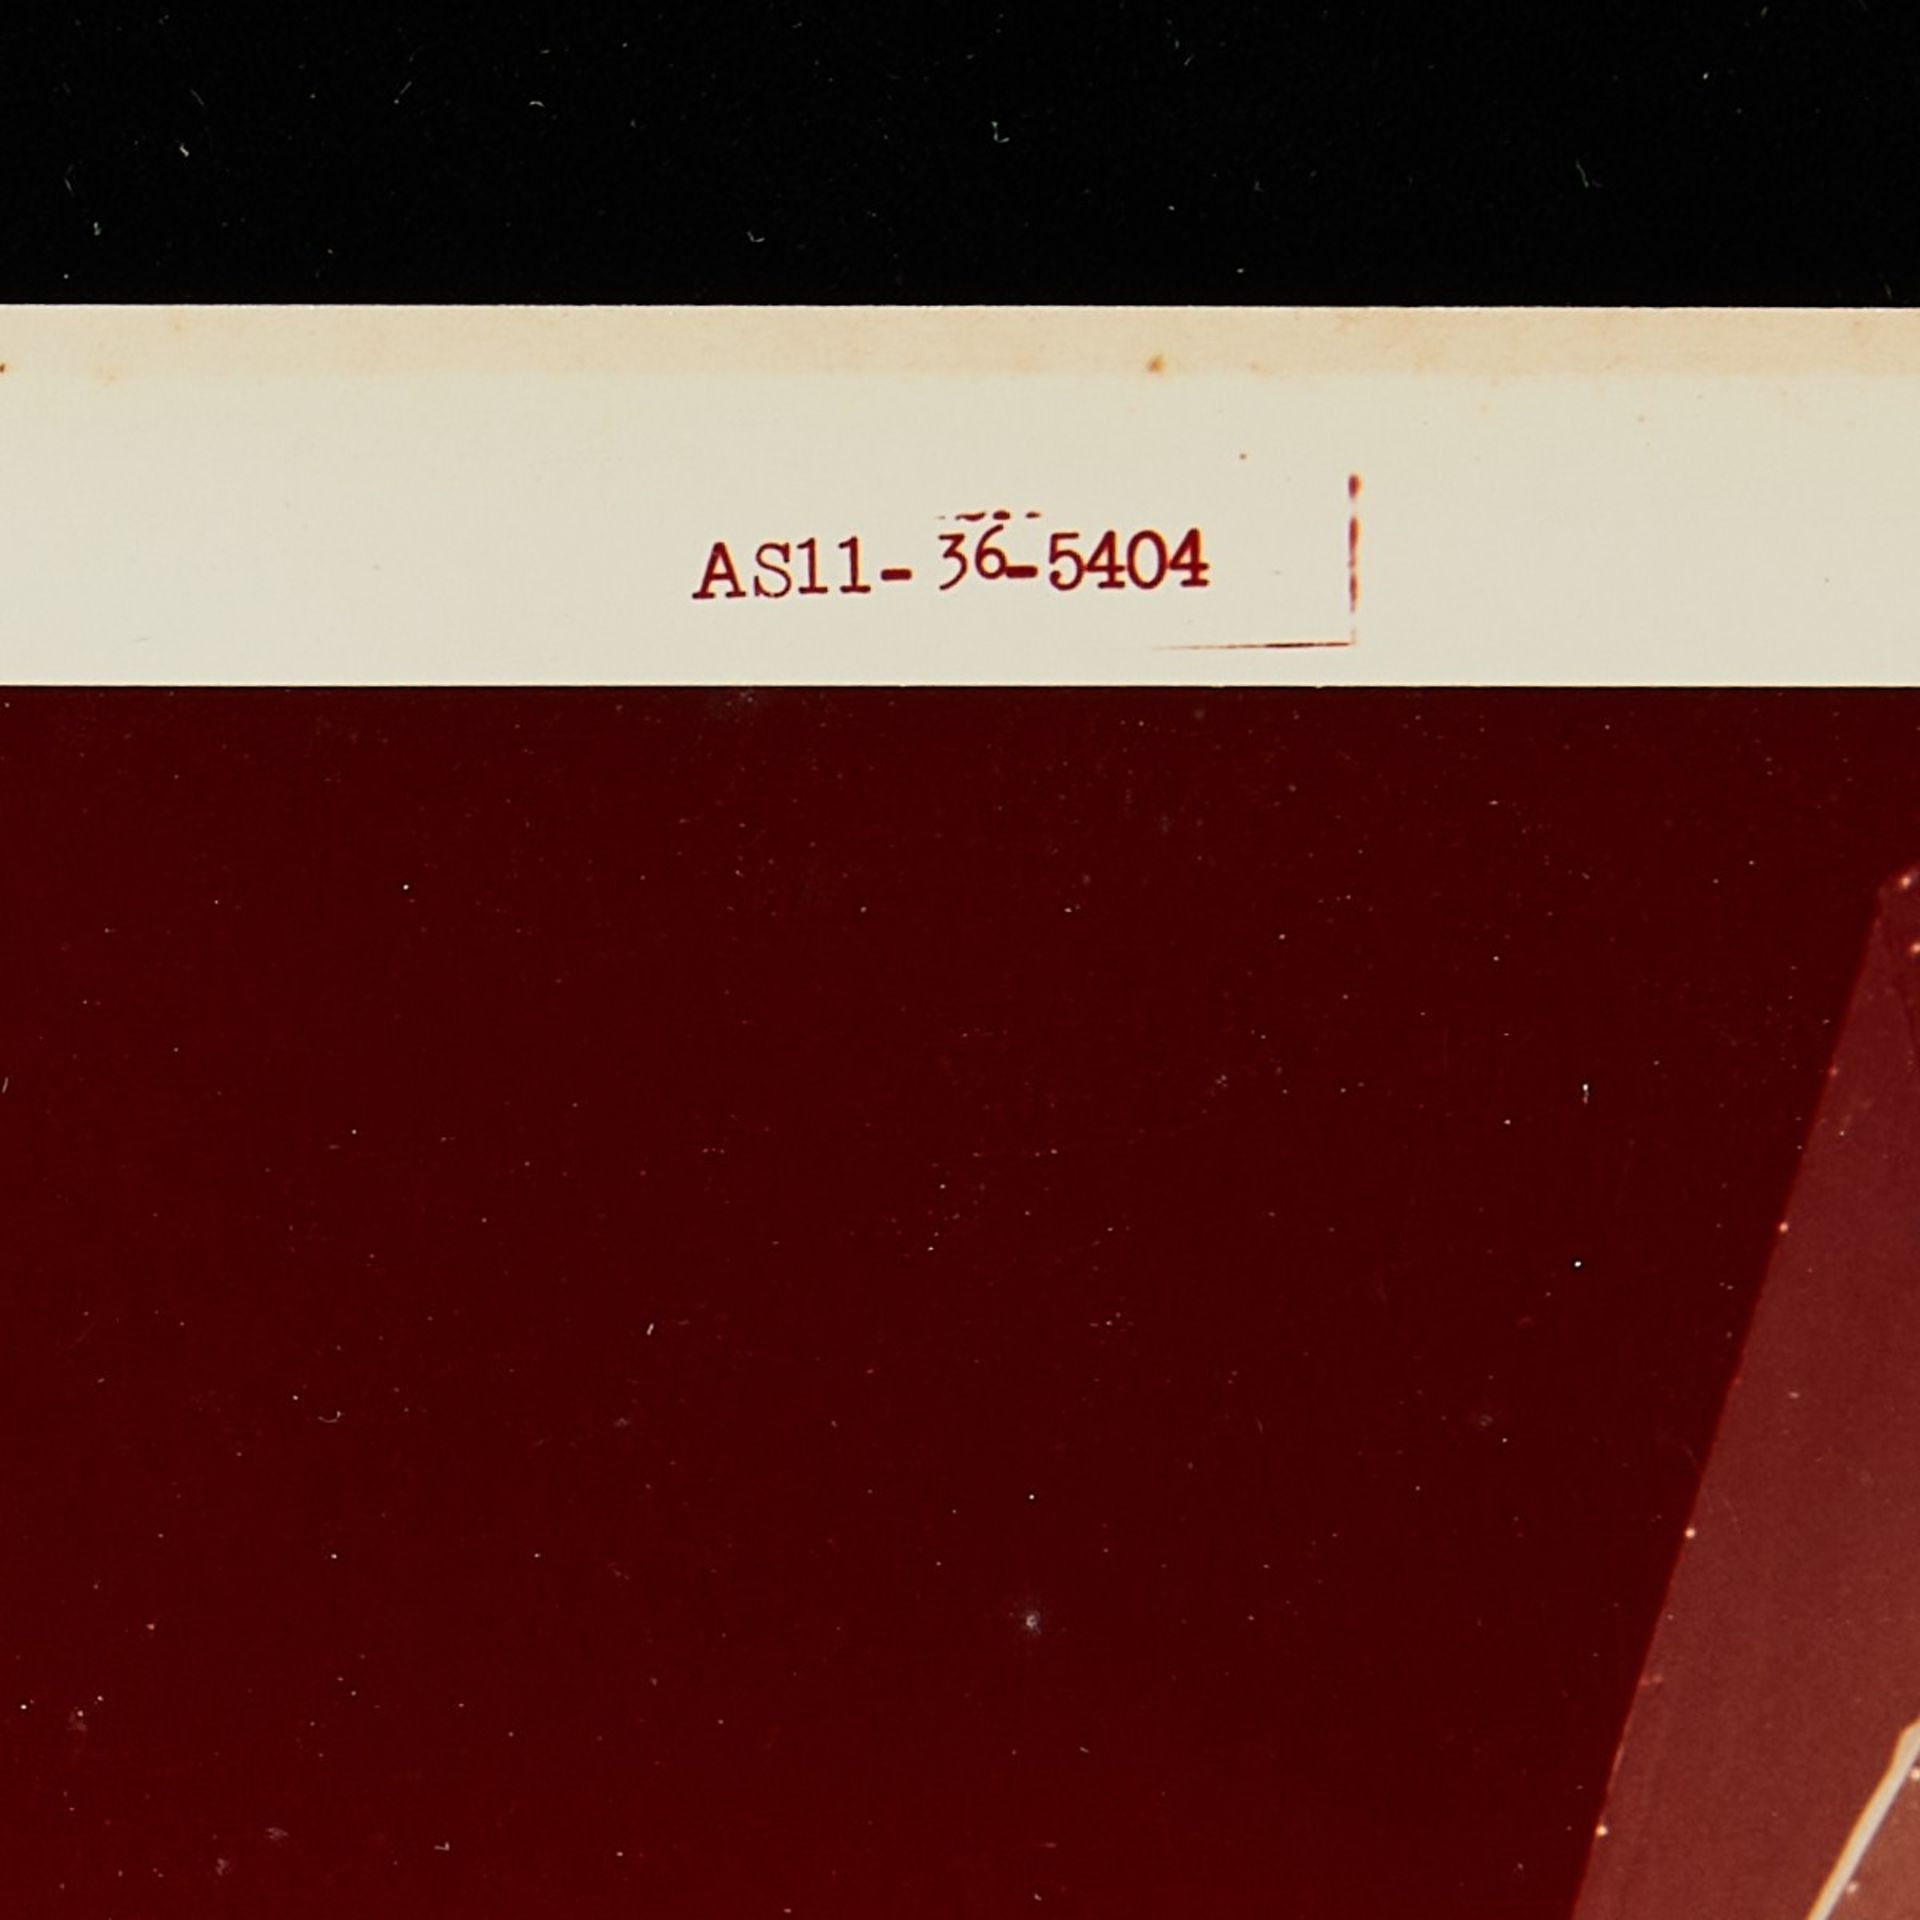 Apollo 11 Red Letter NASA Kodak Print - Image 2 of 5